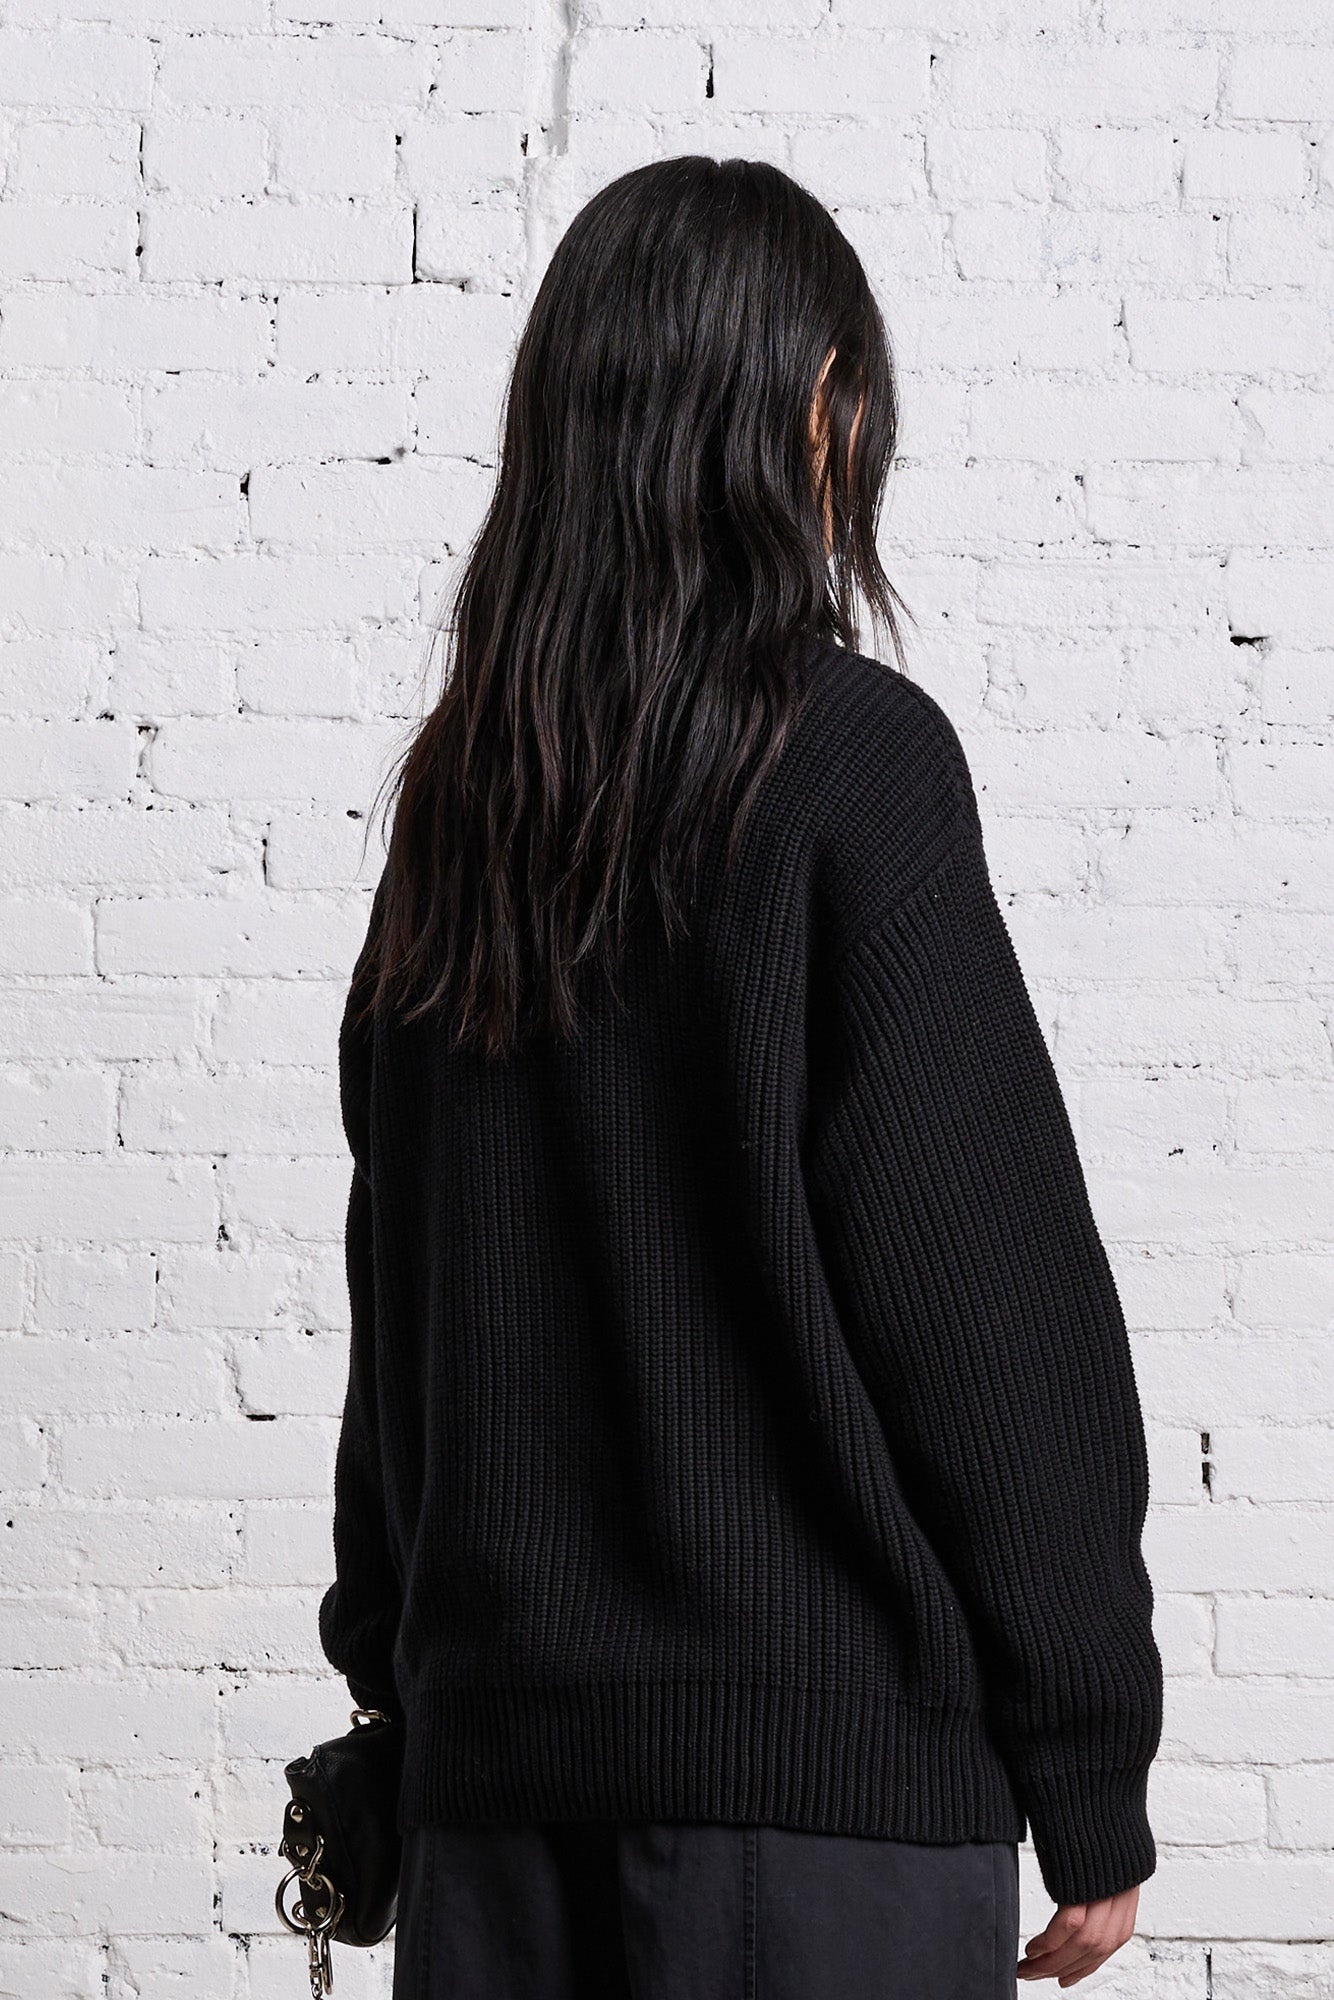 R13 Black Grunge Sweater